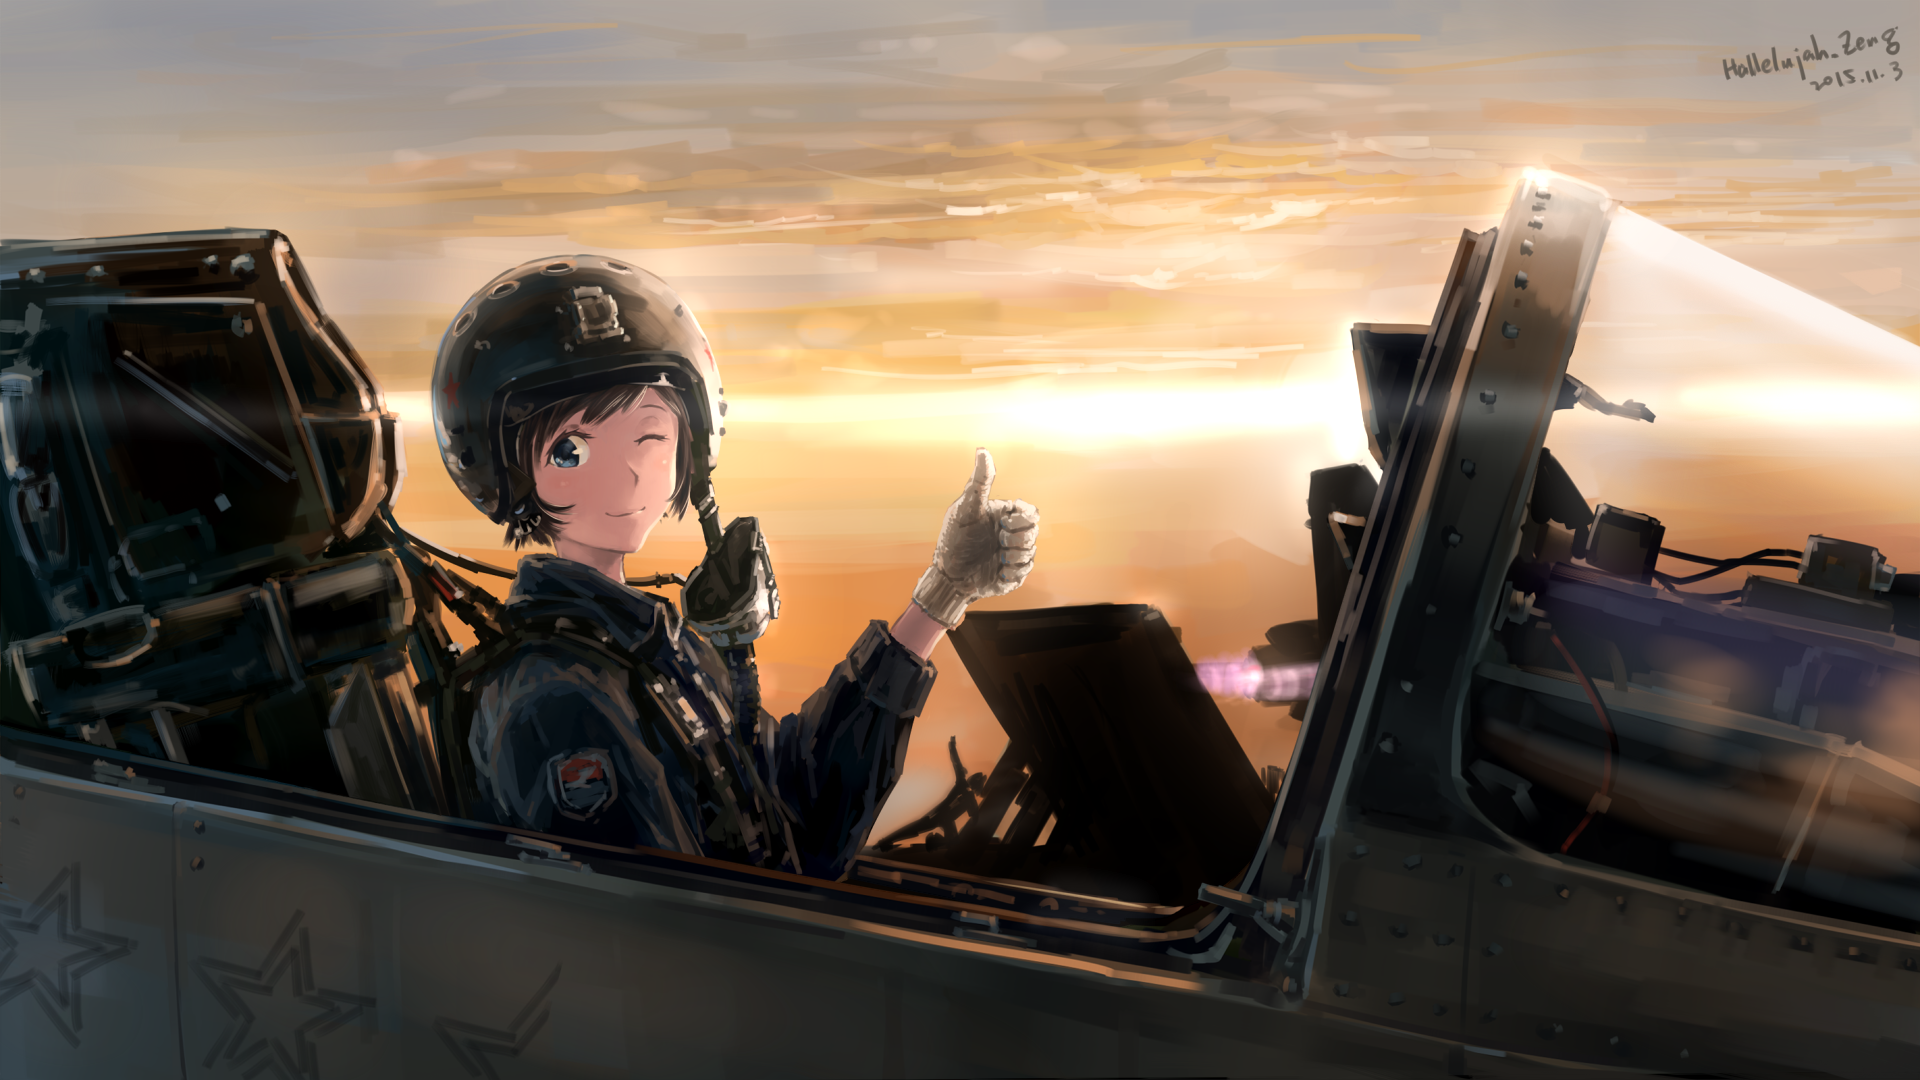 Military Anime Wallpaper Free Military Anime Background